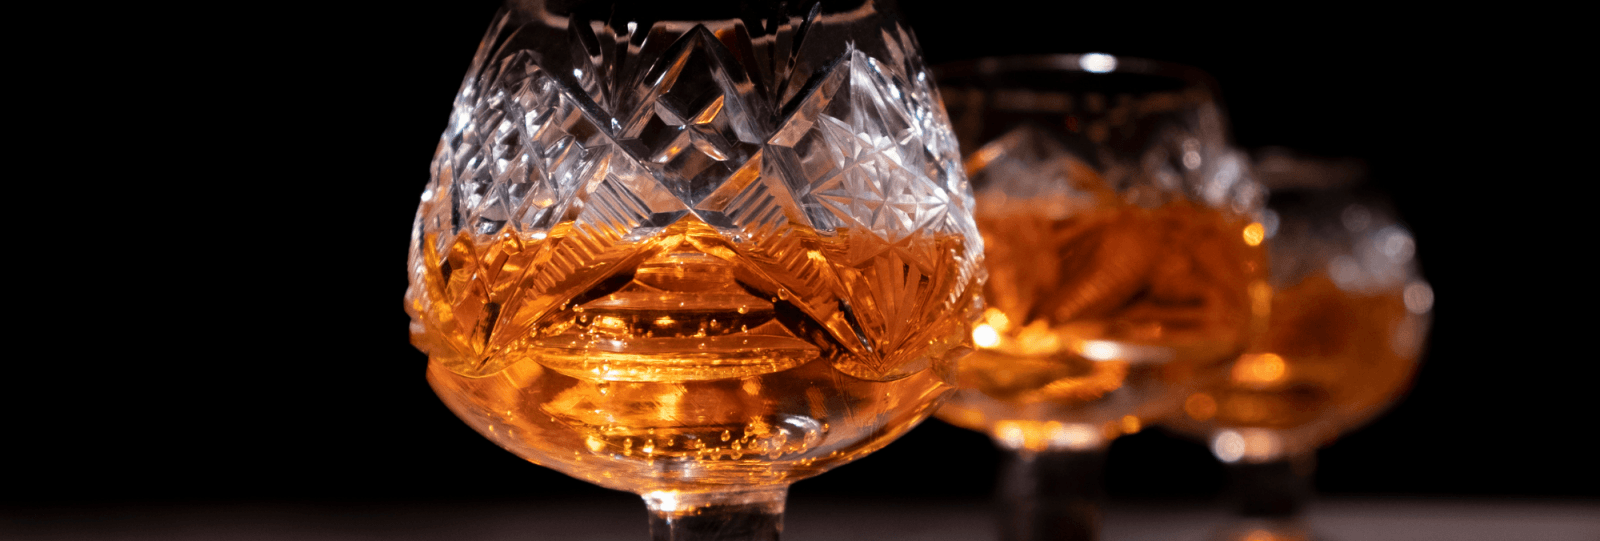 Dégustation Whiskies du monde - Terres de Syrah